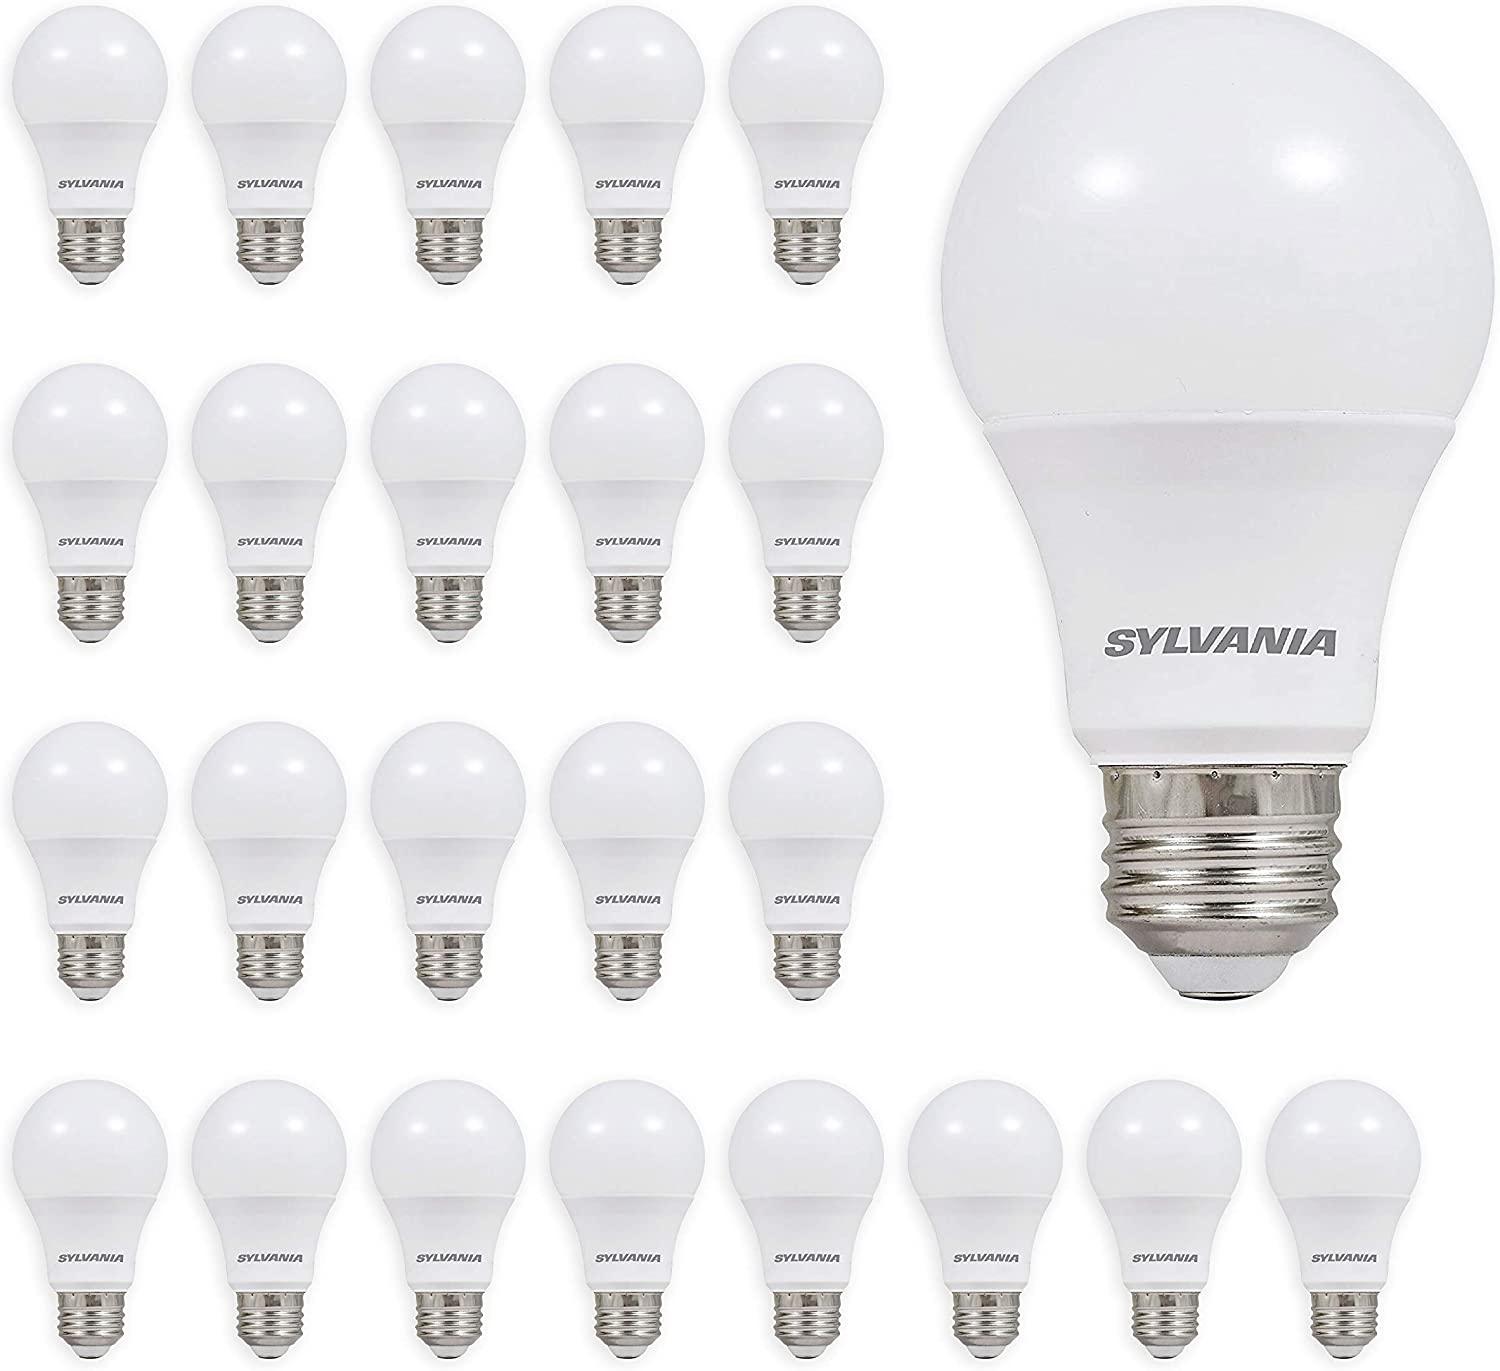 24 Sylvania General Lighting Soft White A29 Light Bulbs for $17.35